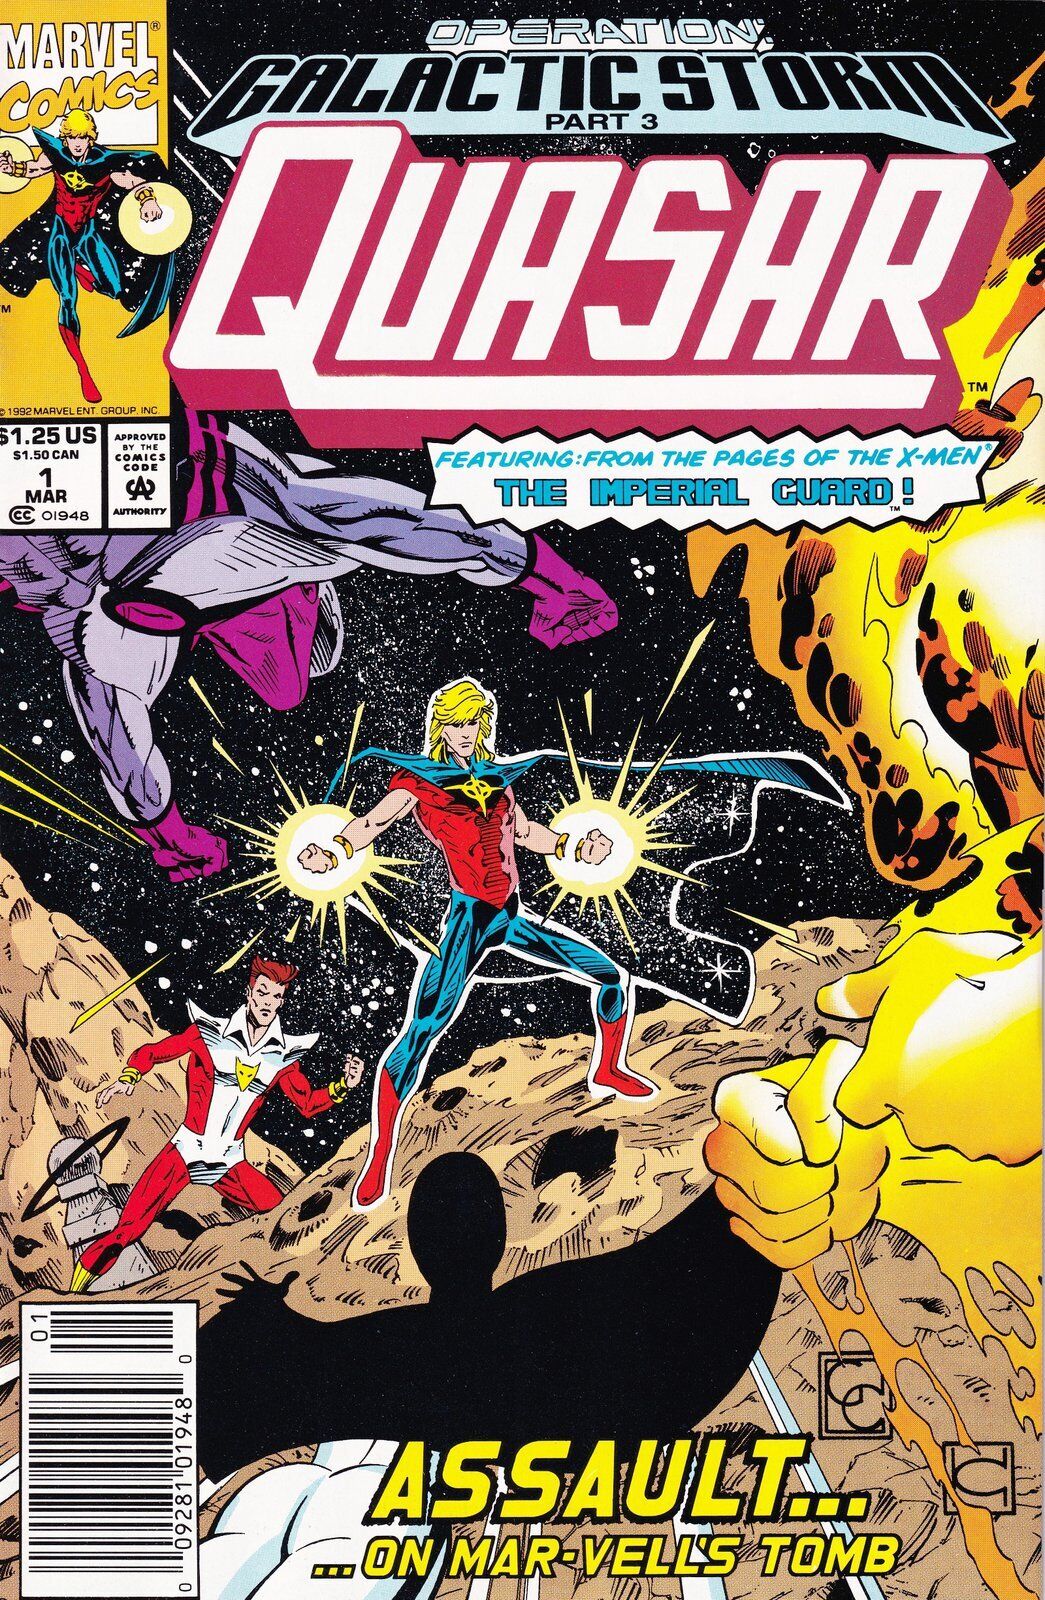 Quasar #1 Newsstand Cover Marvel